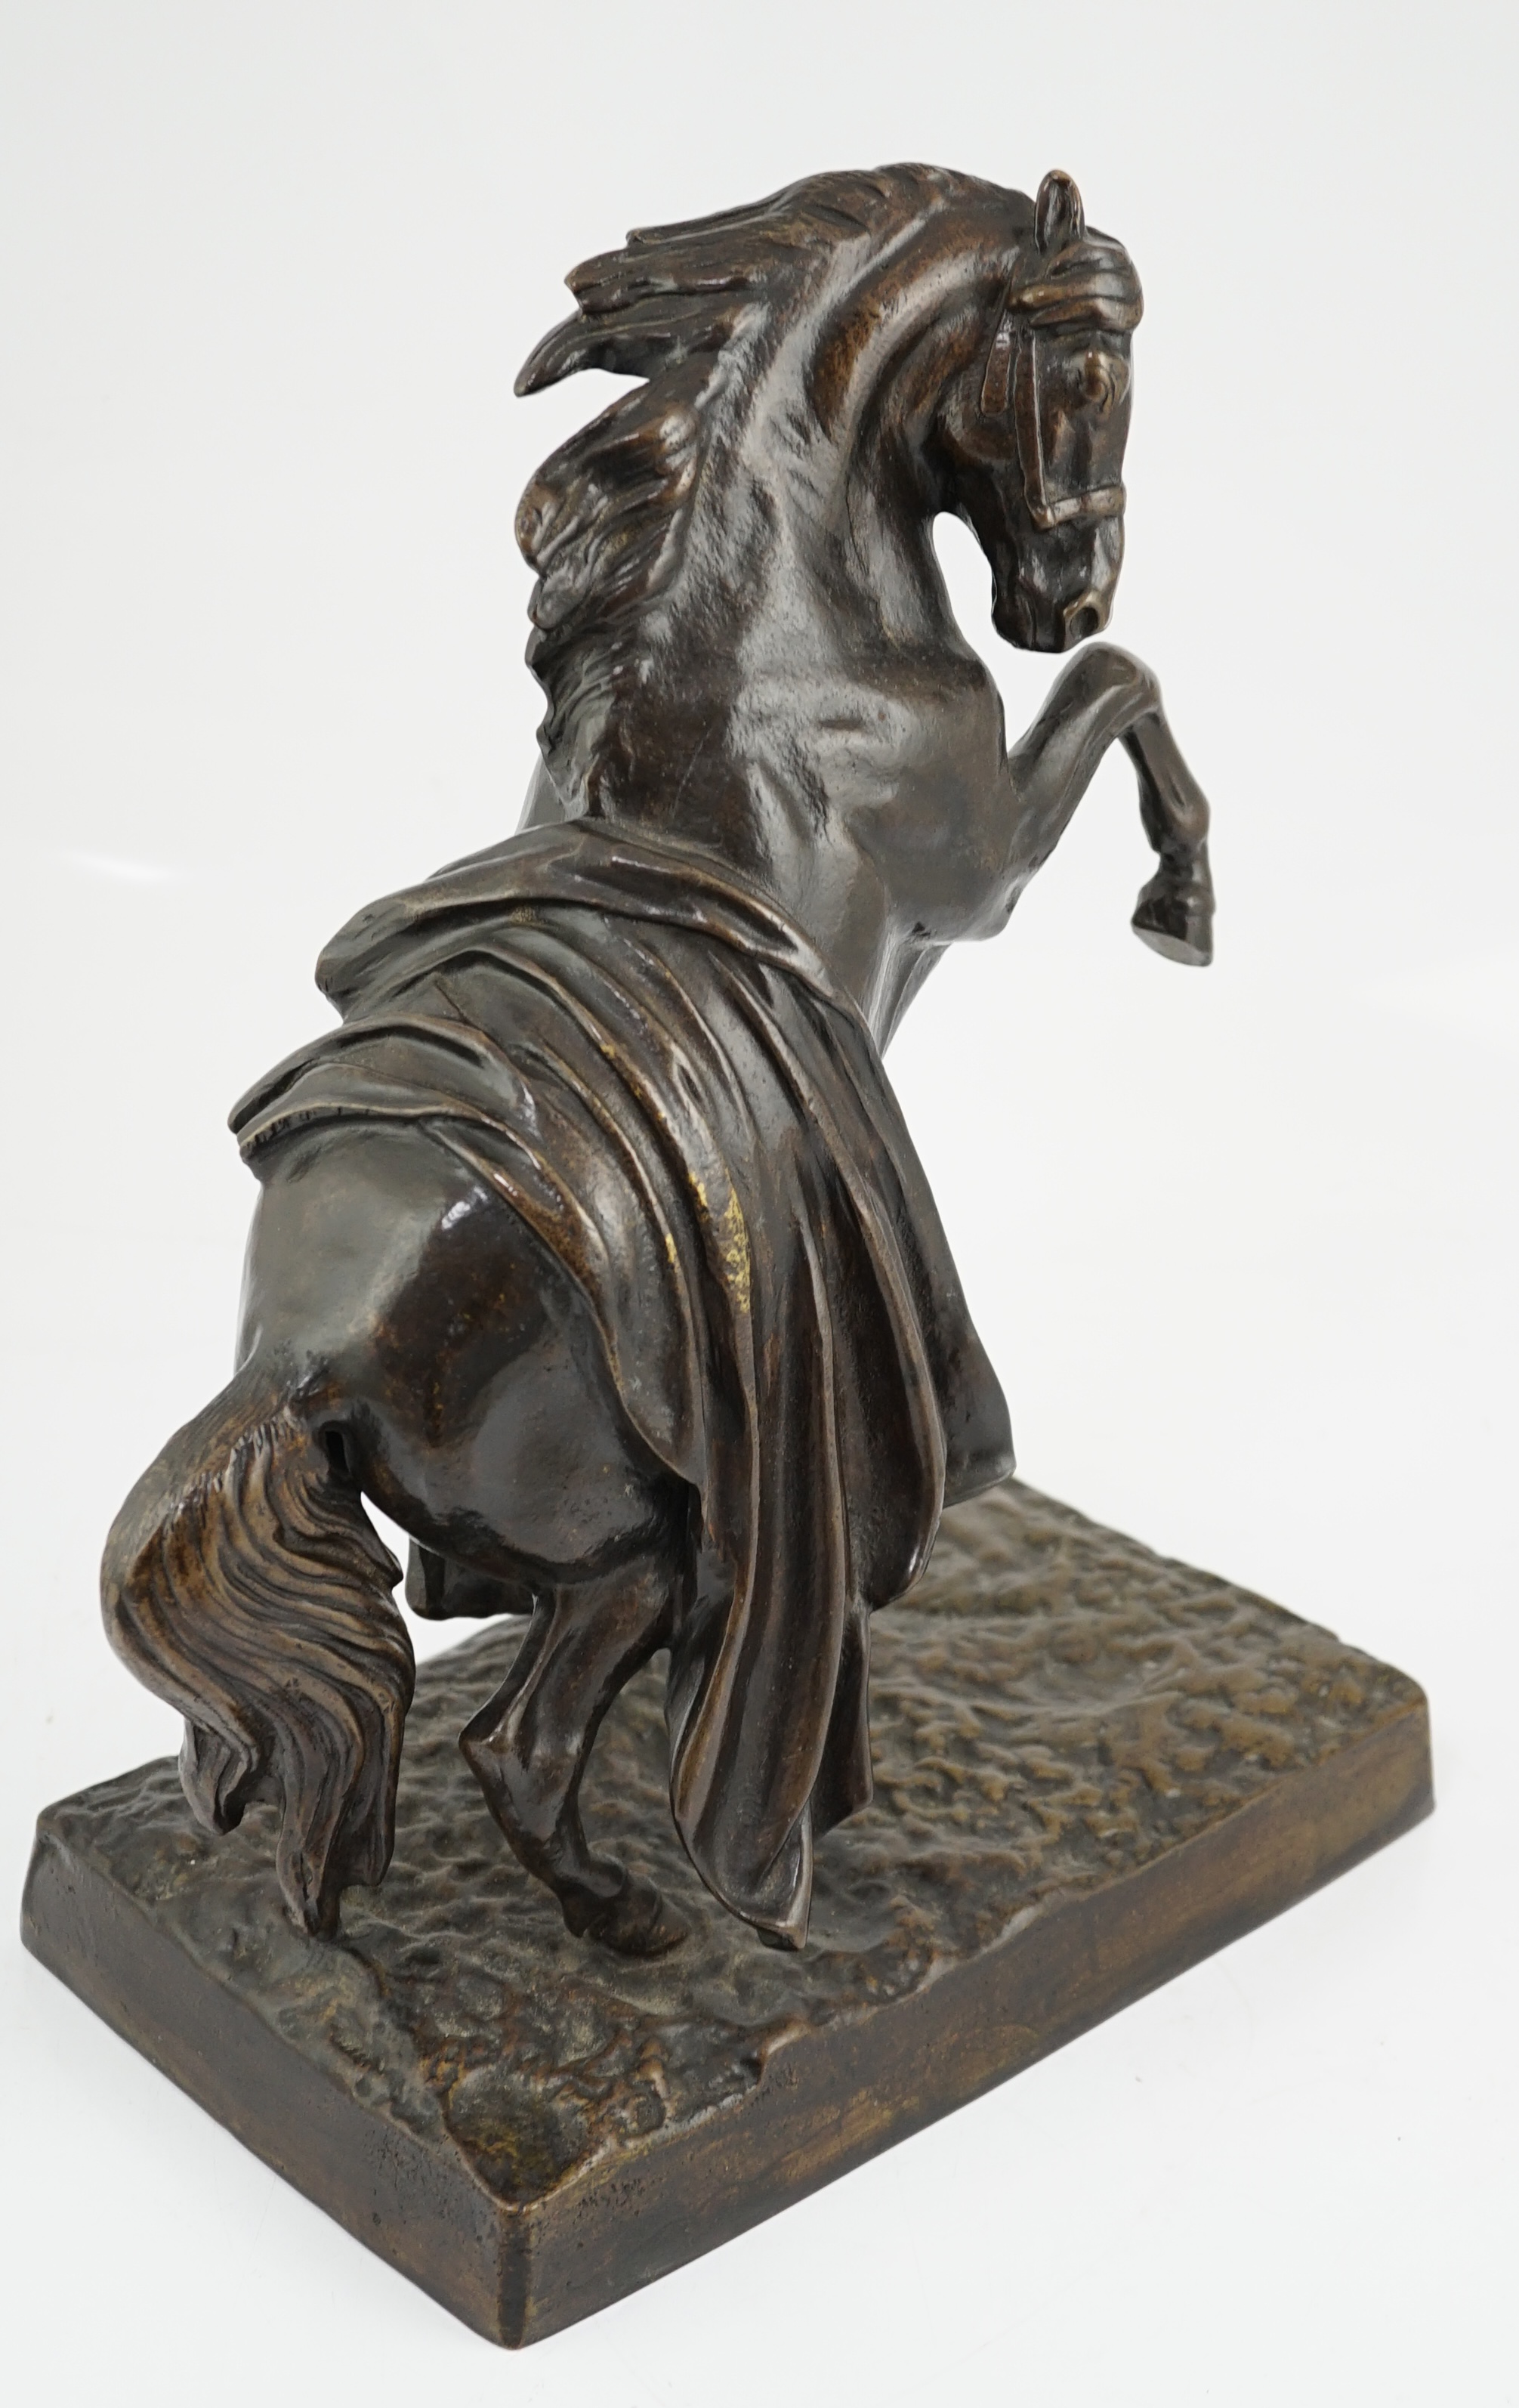 Jakob Freiherr Clodt von Jürgensburg (Russian, 1805-1867), a bronze of a rearing horse